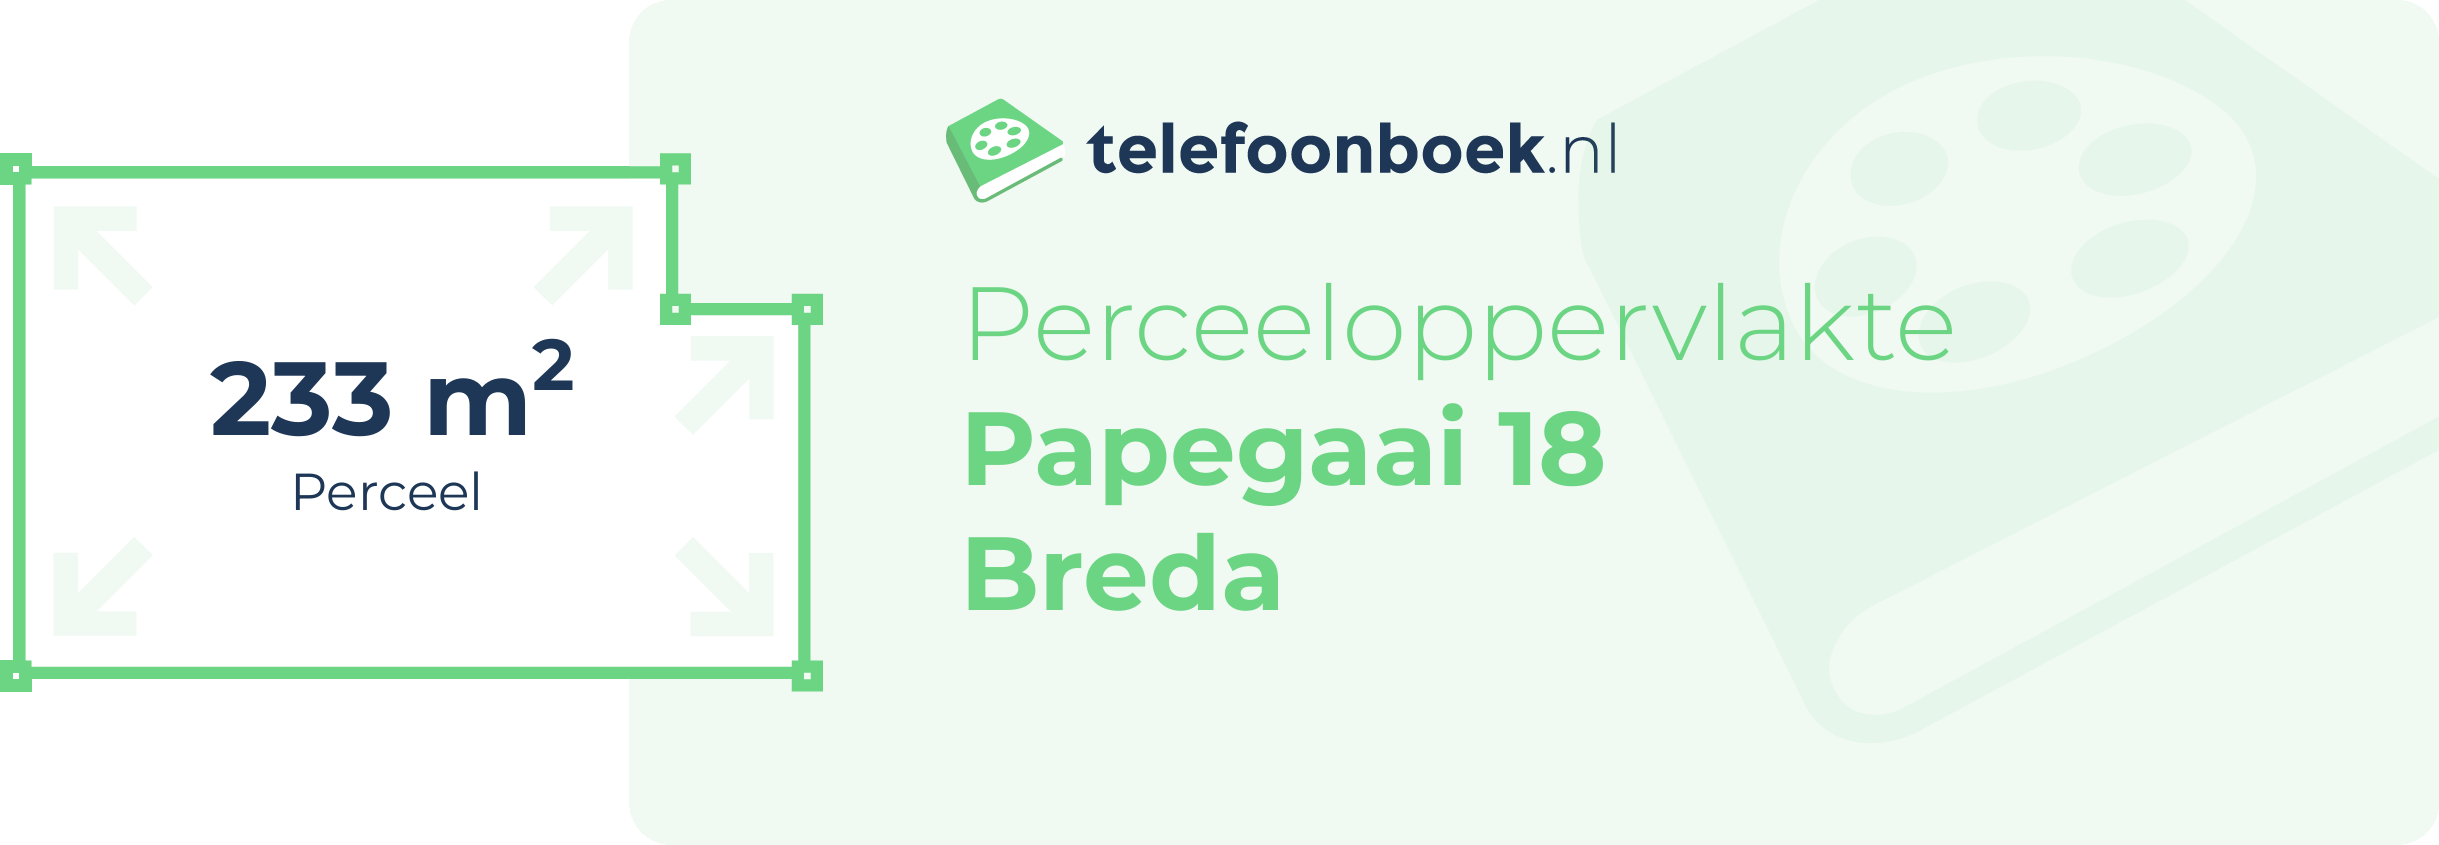 Perceeloppervlakte Papegaai 18 Breda